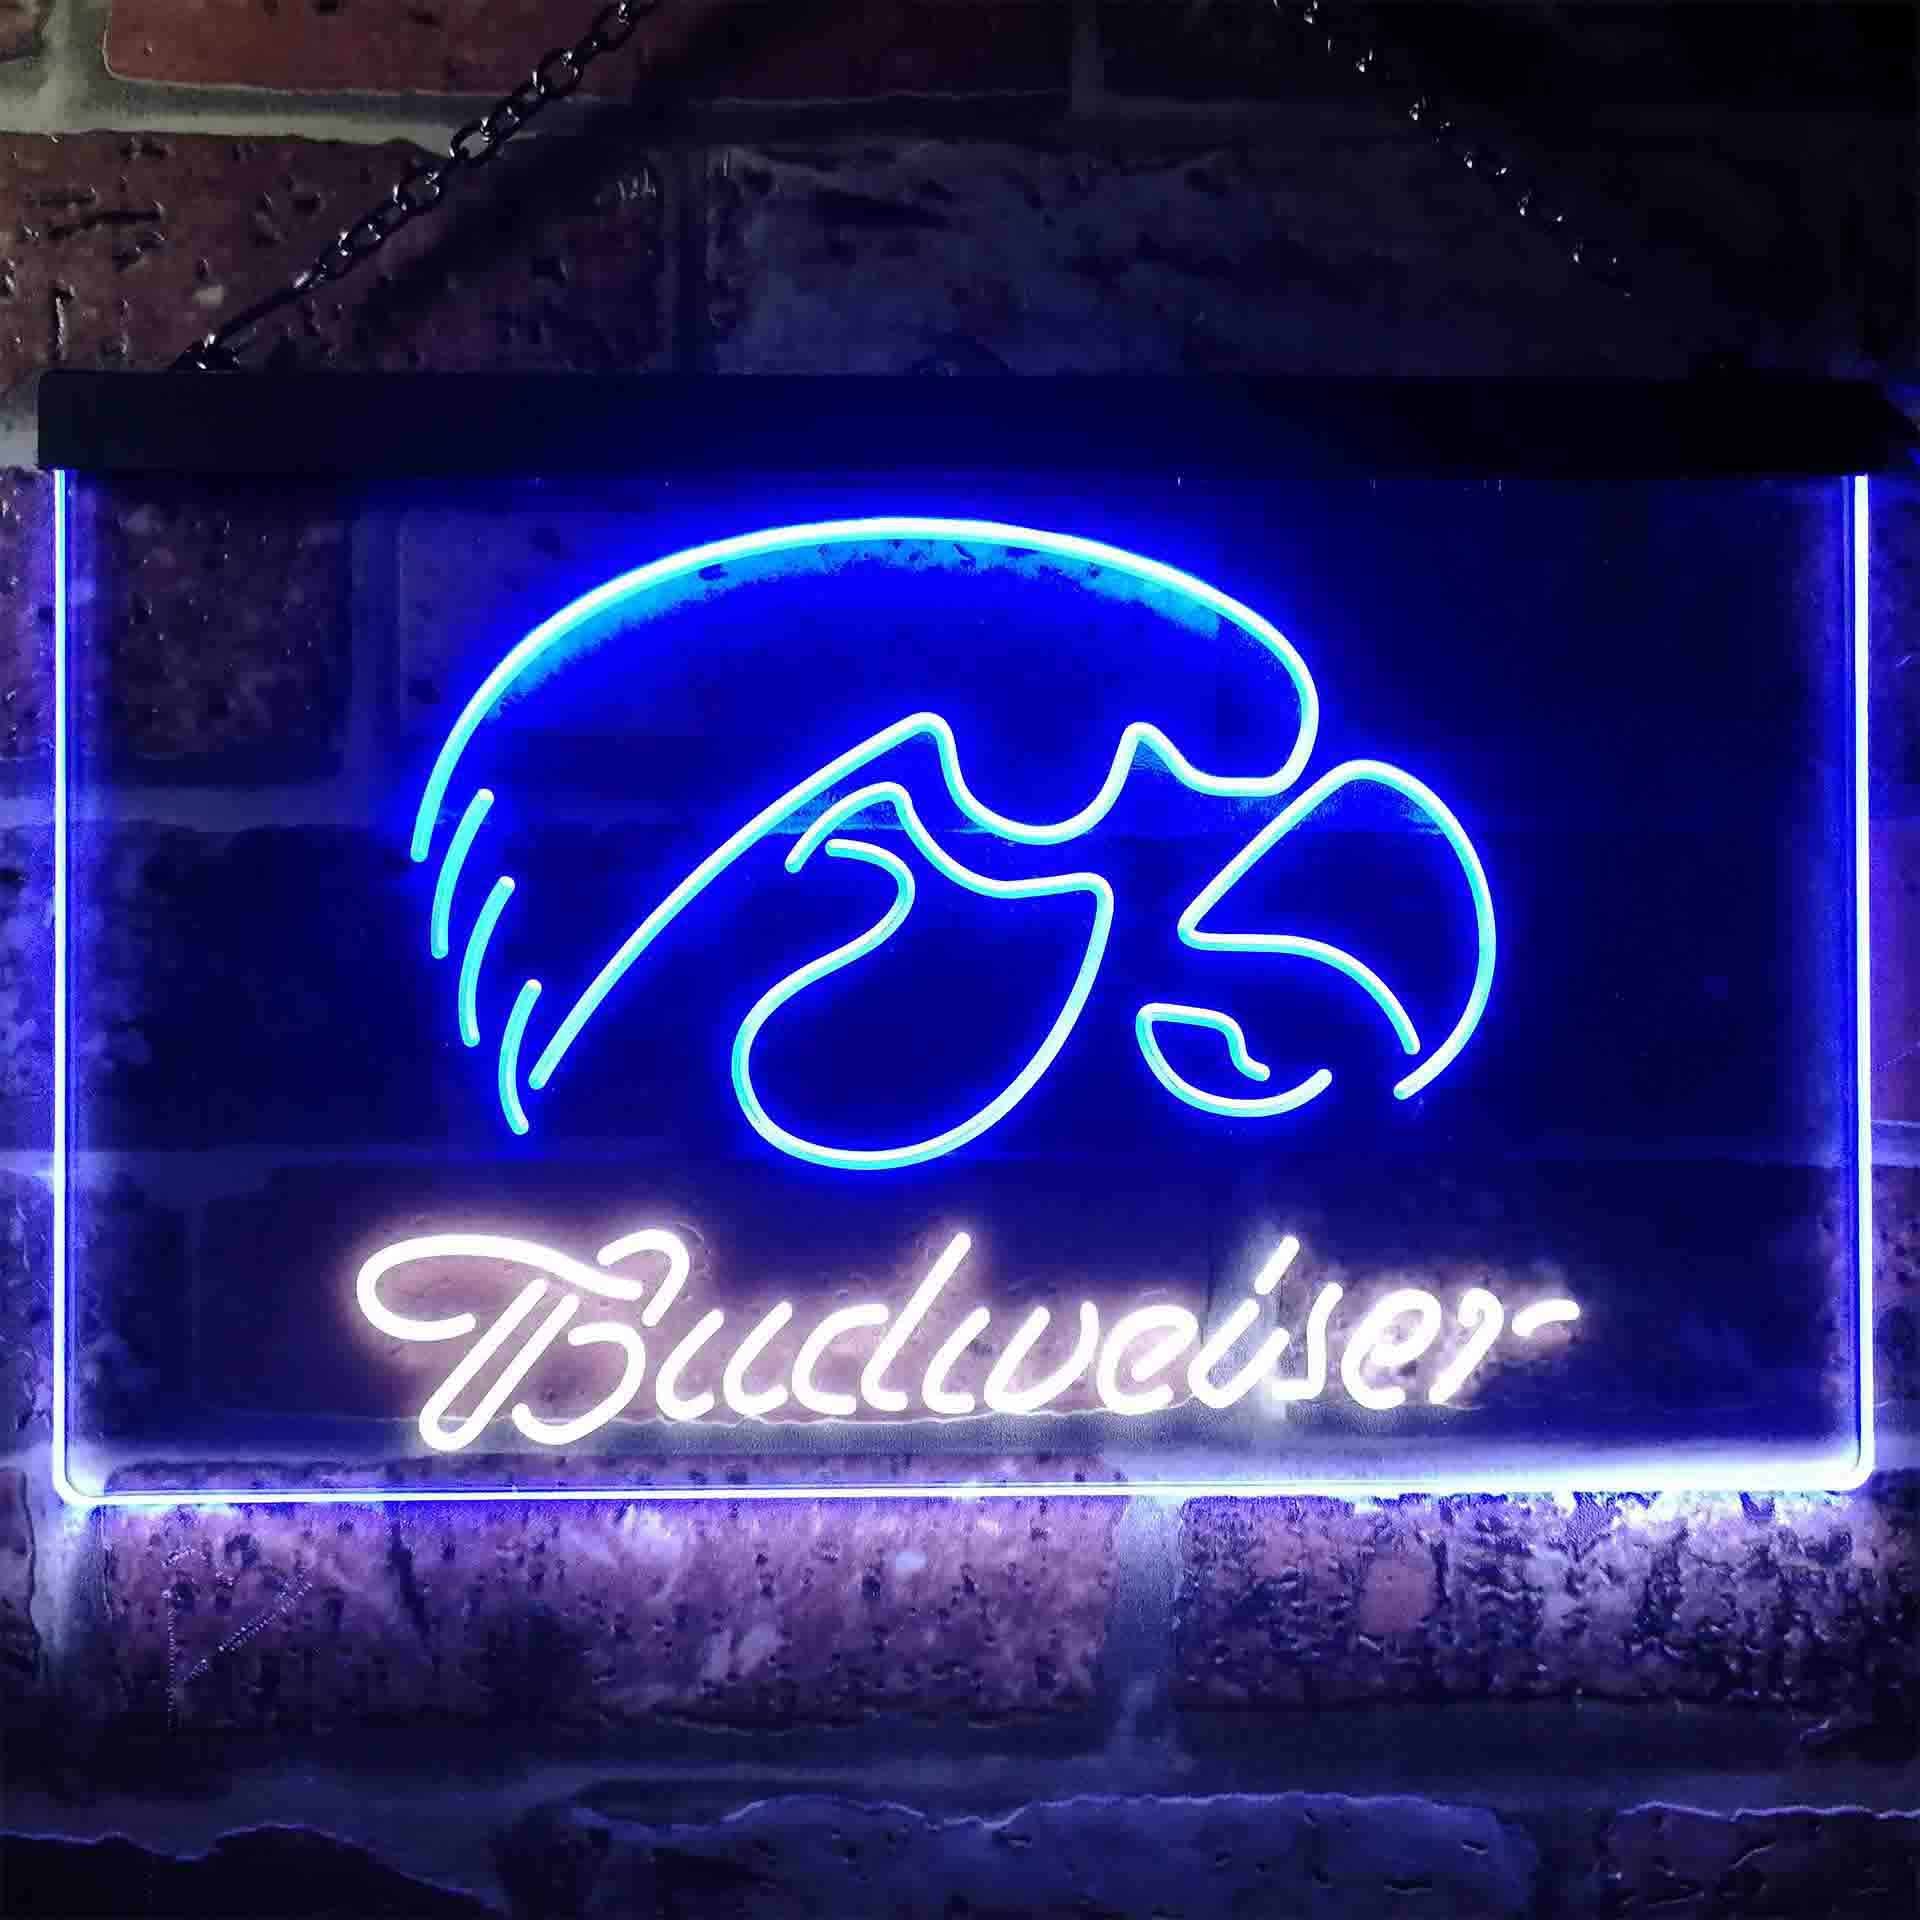 Budweiserss University Of Lowa Club Man Cave Neon Sign